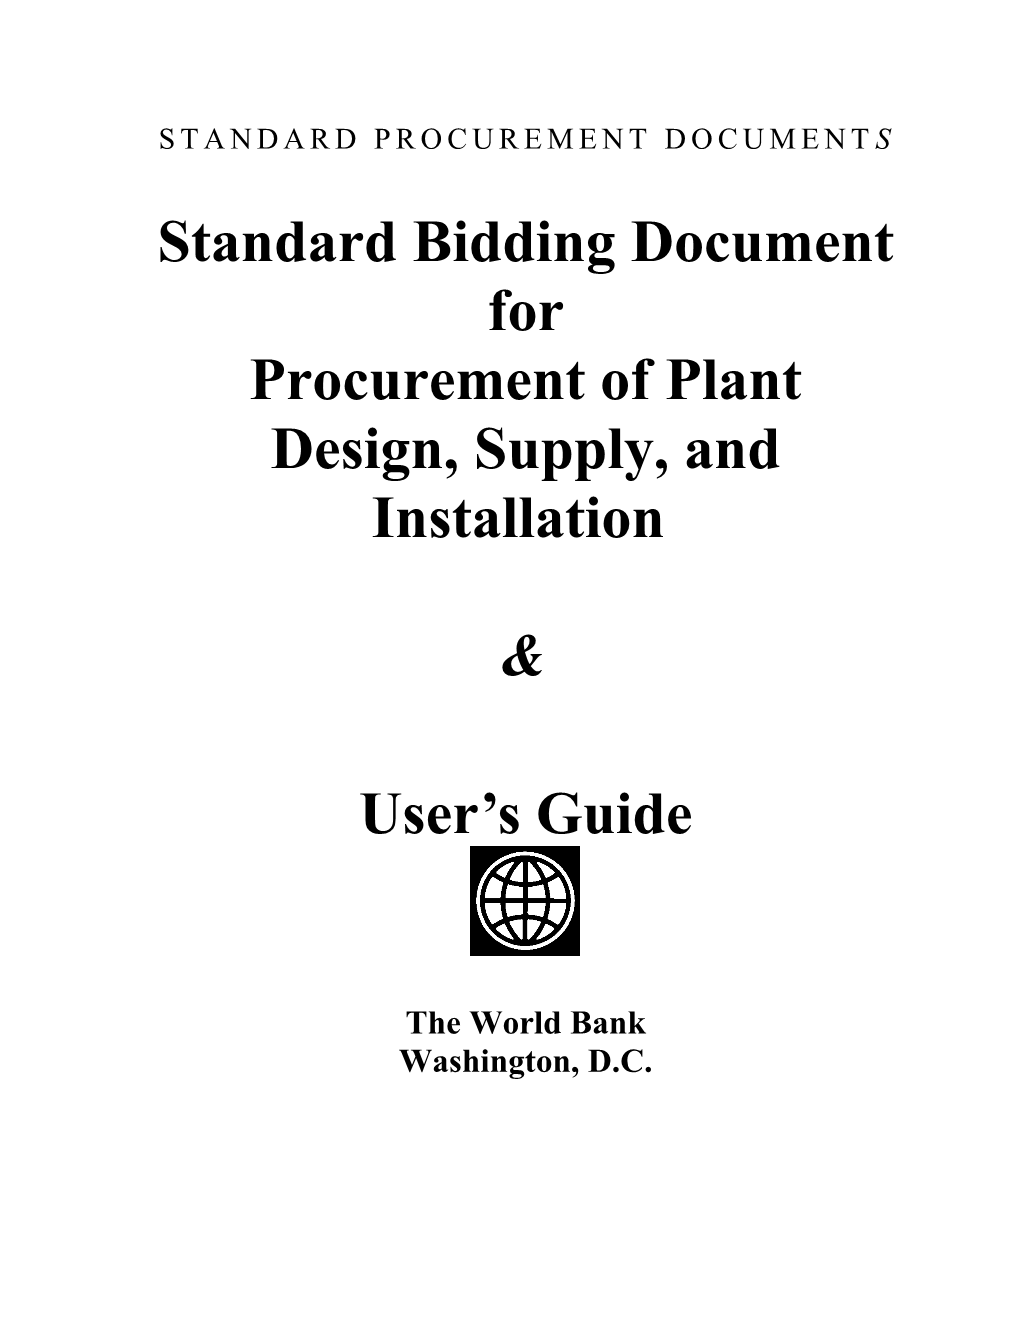 Standard Procurement Documents